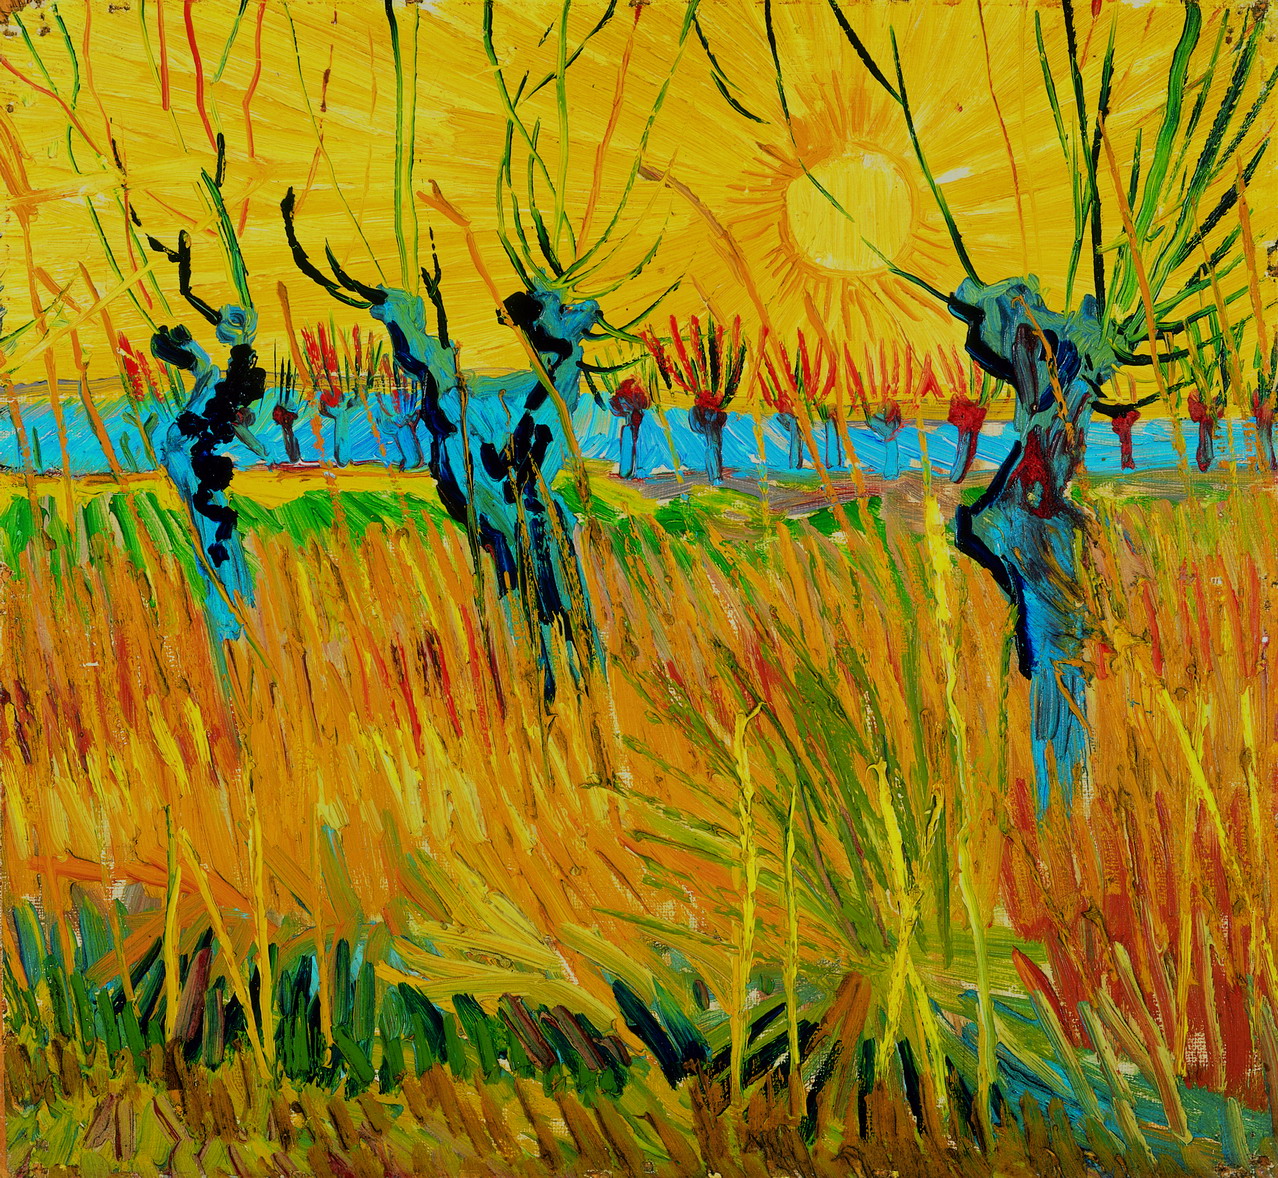 Salici al tramonto by Vincent van Gogh - 1888 - 31,6 x 34,3 cm Kröller-Müller Museum